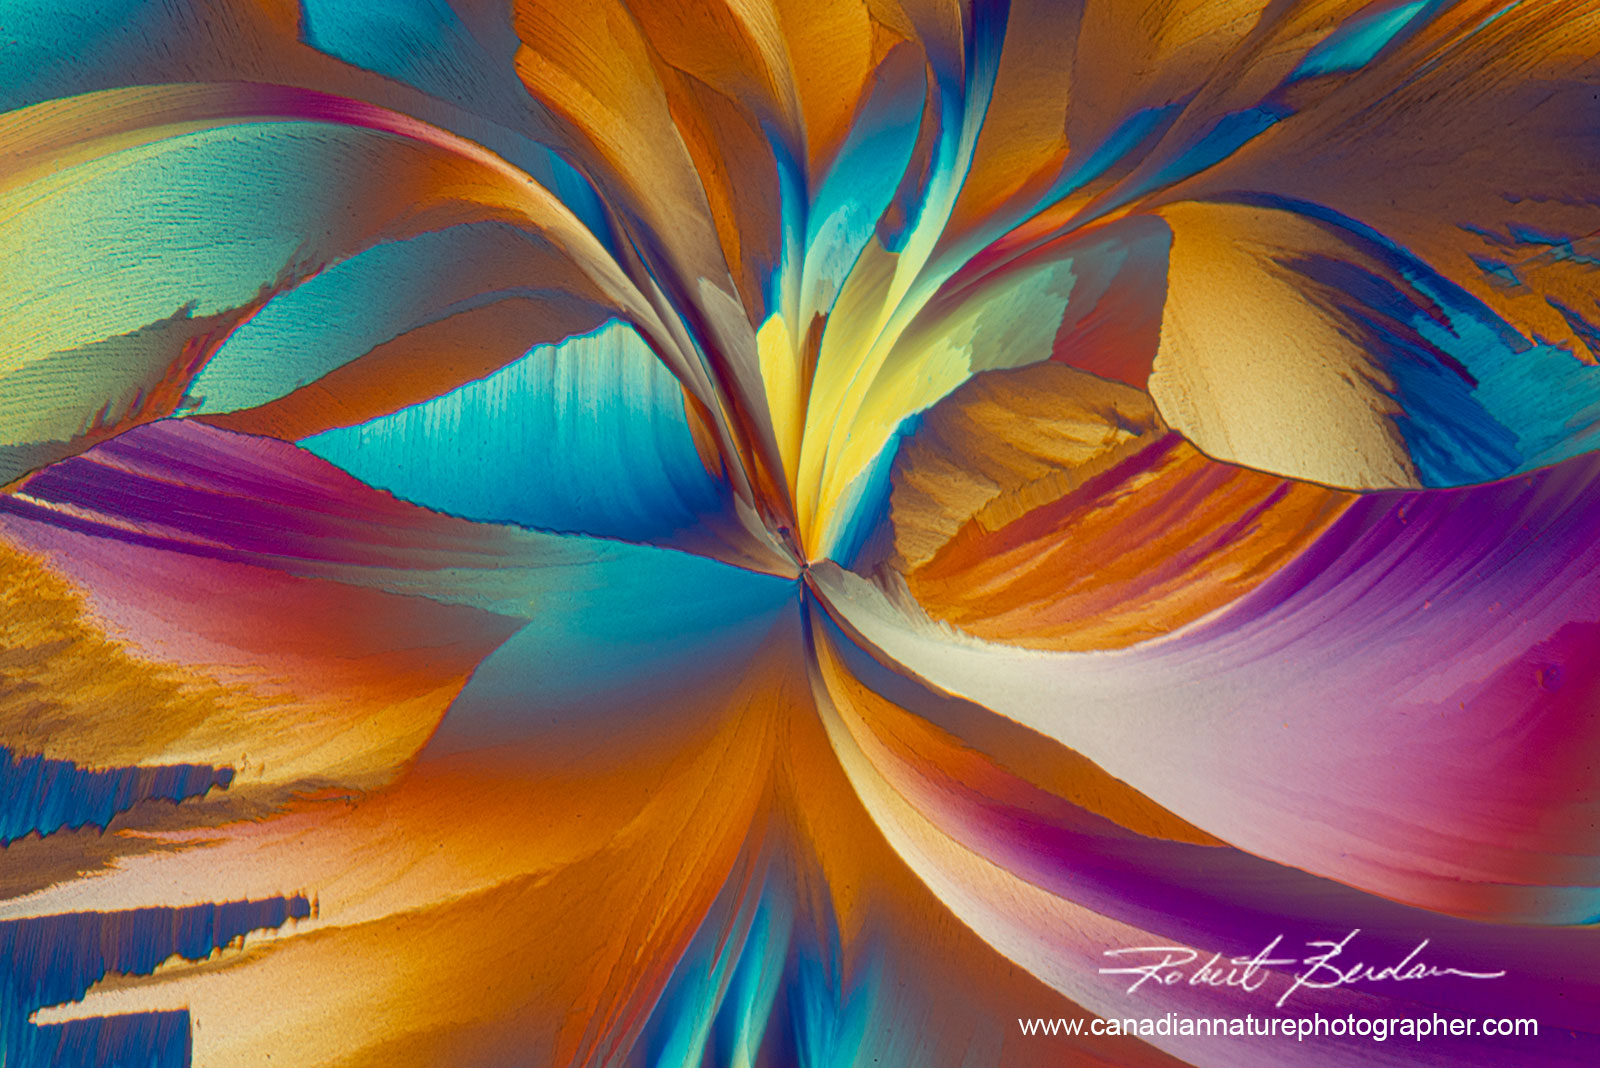 Red wine (CA1) crystals from Napa Valley polarized light microscopy 100X by Robert Berdan ©